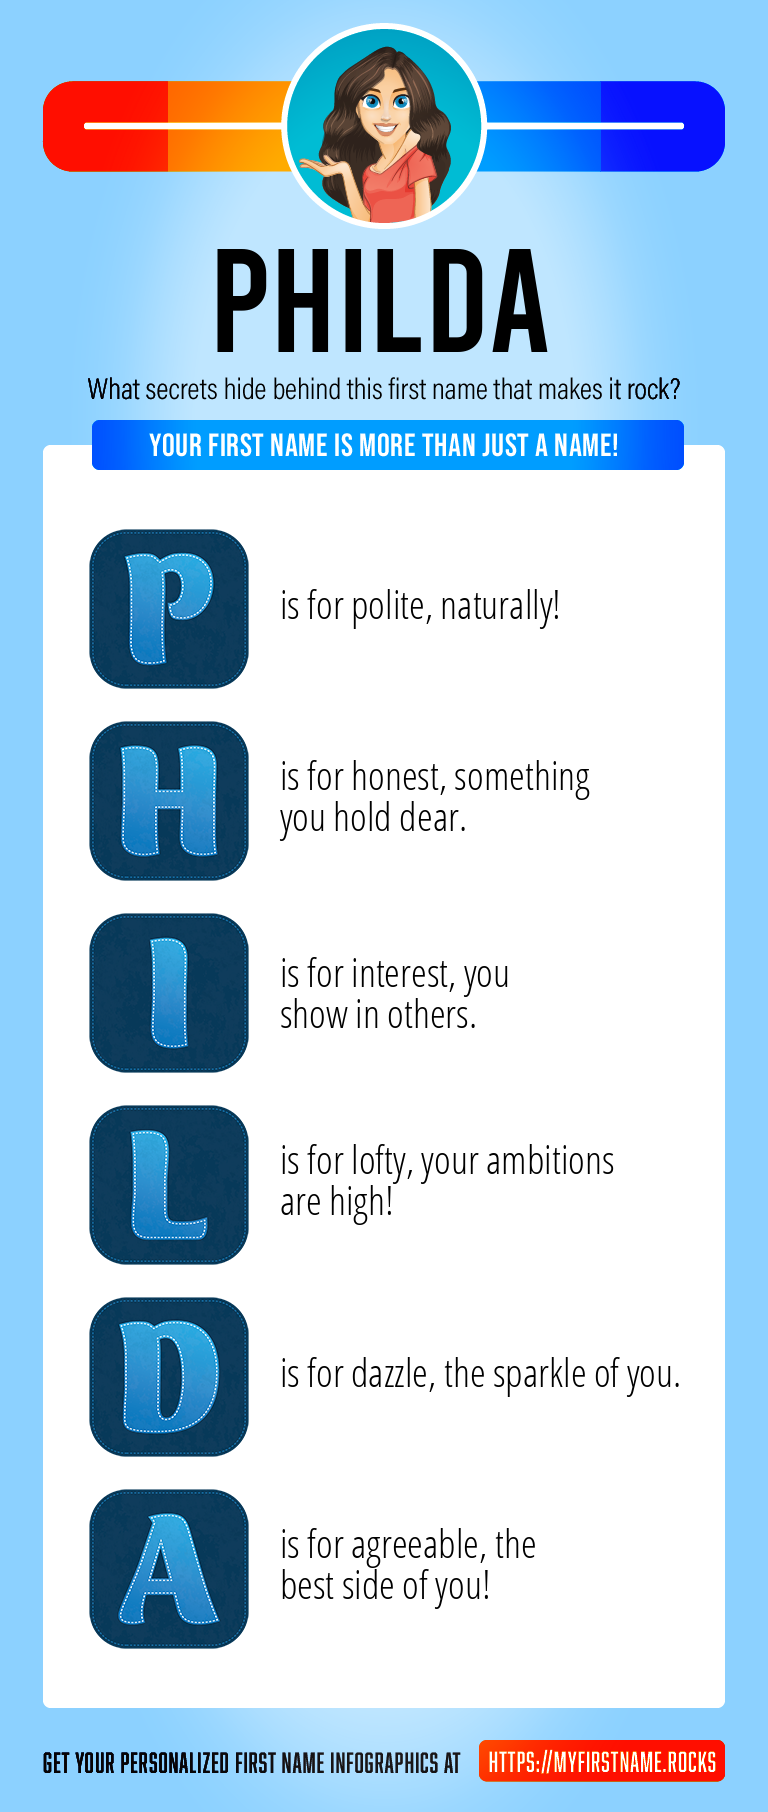 Philda Infographics